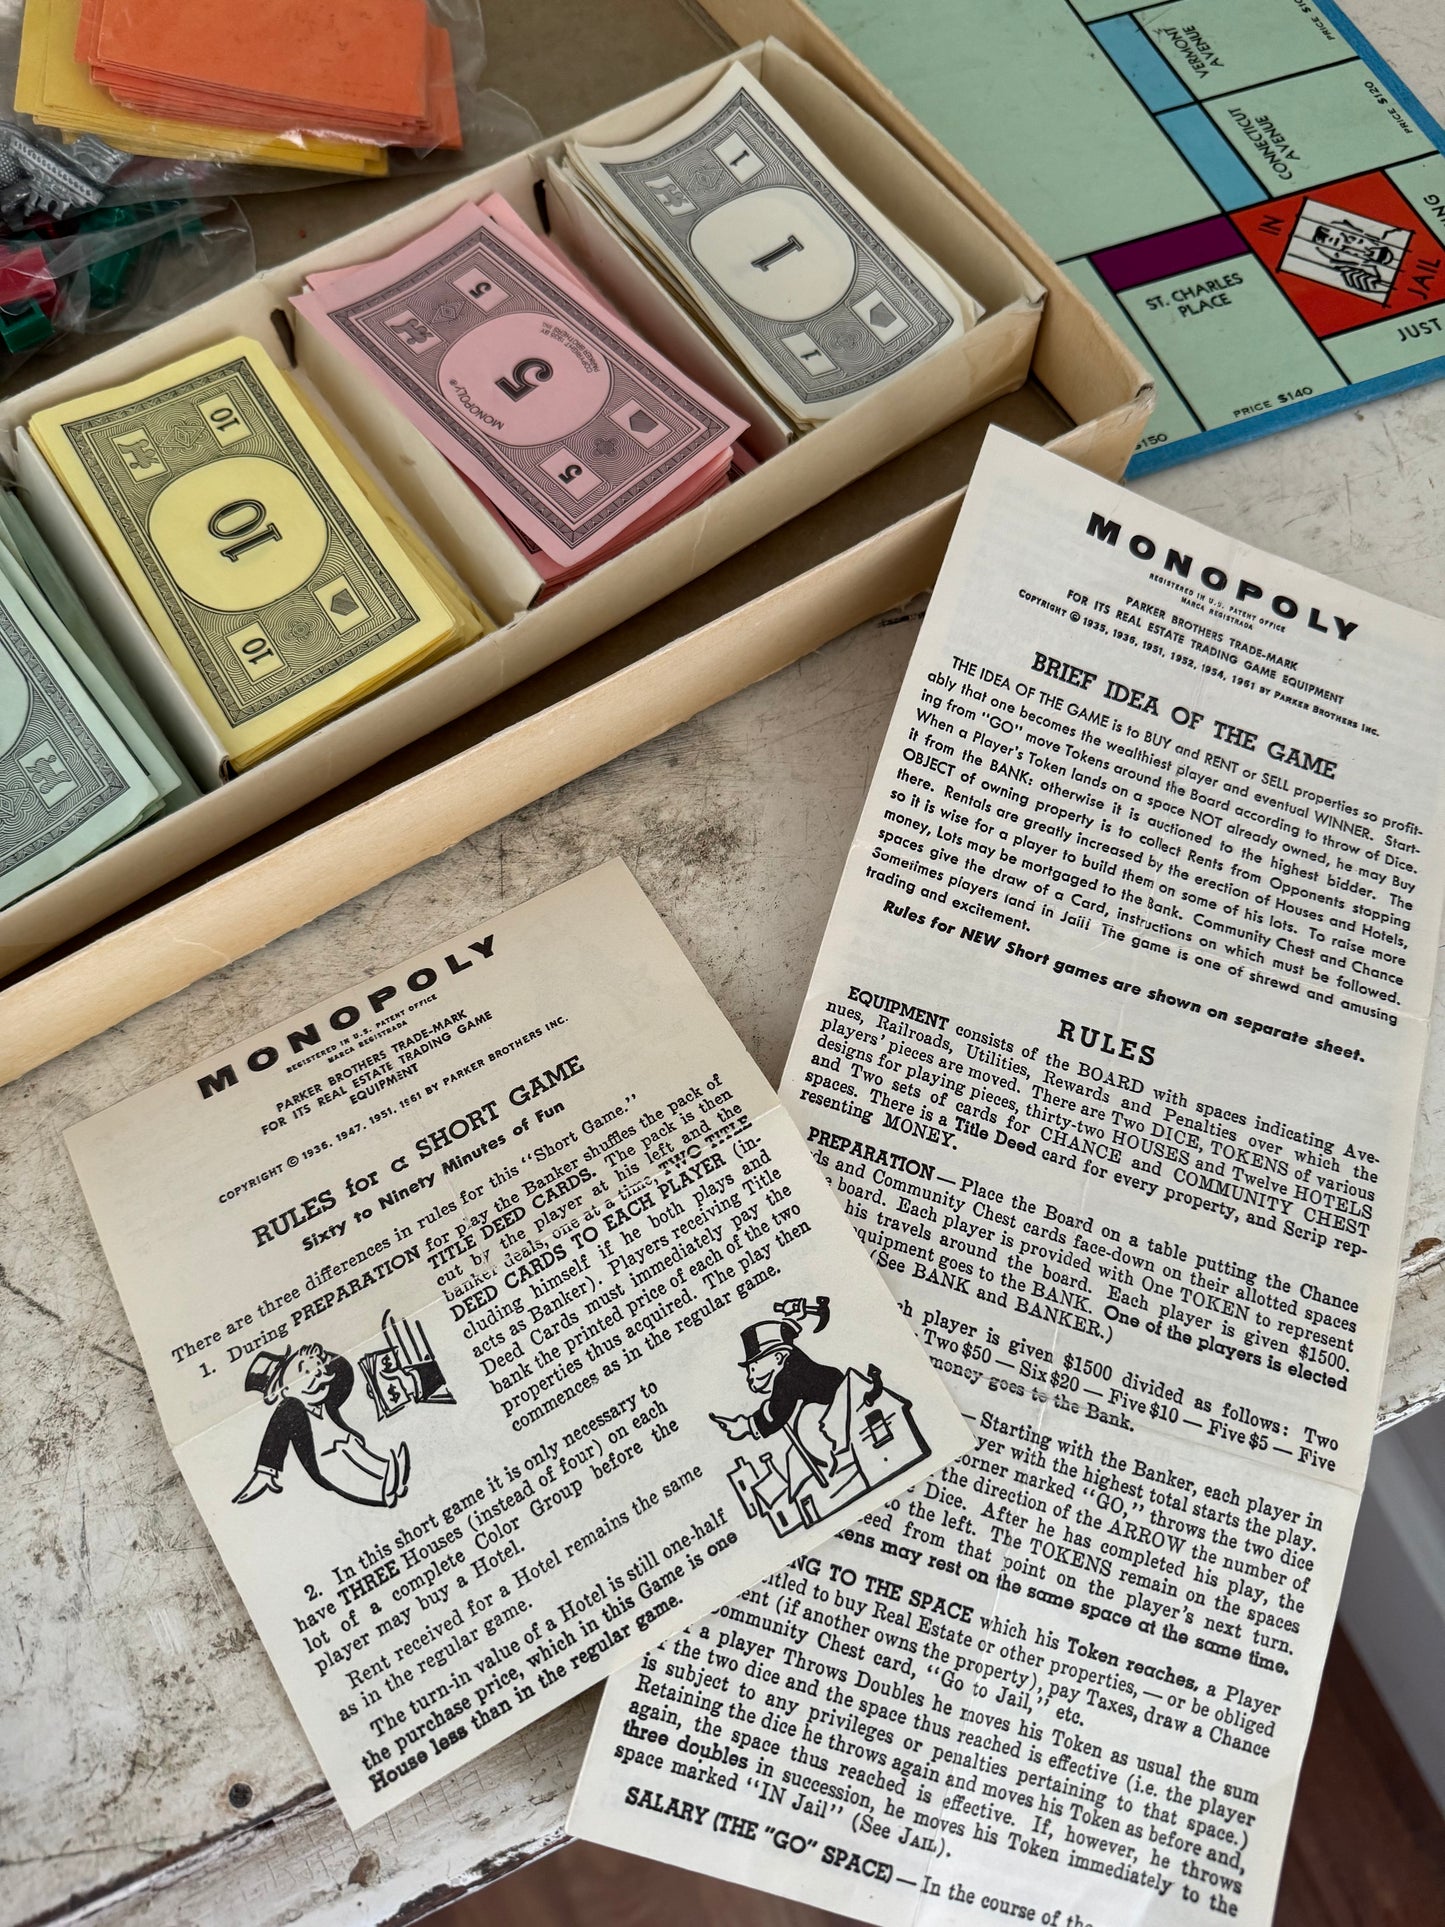 Vintage monopoly game